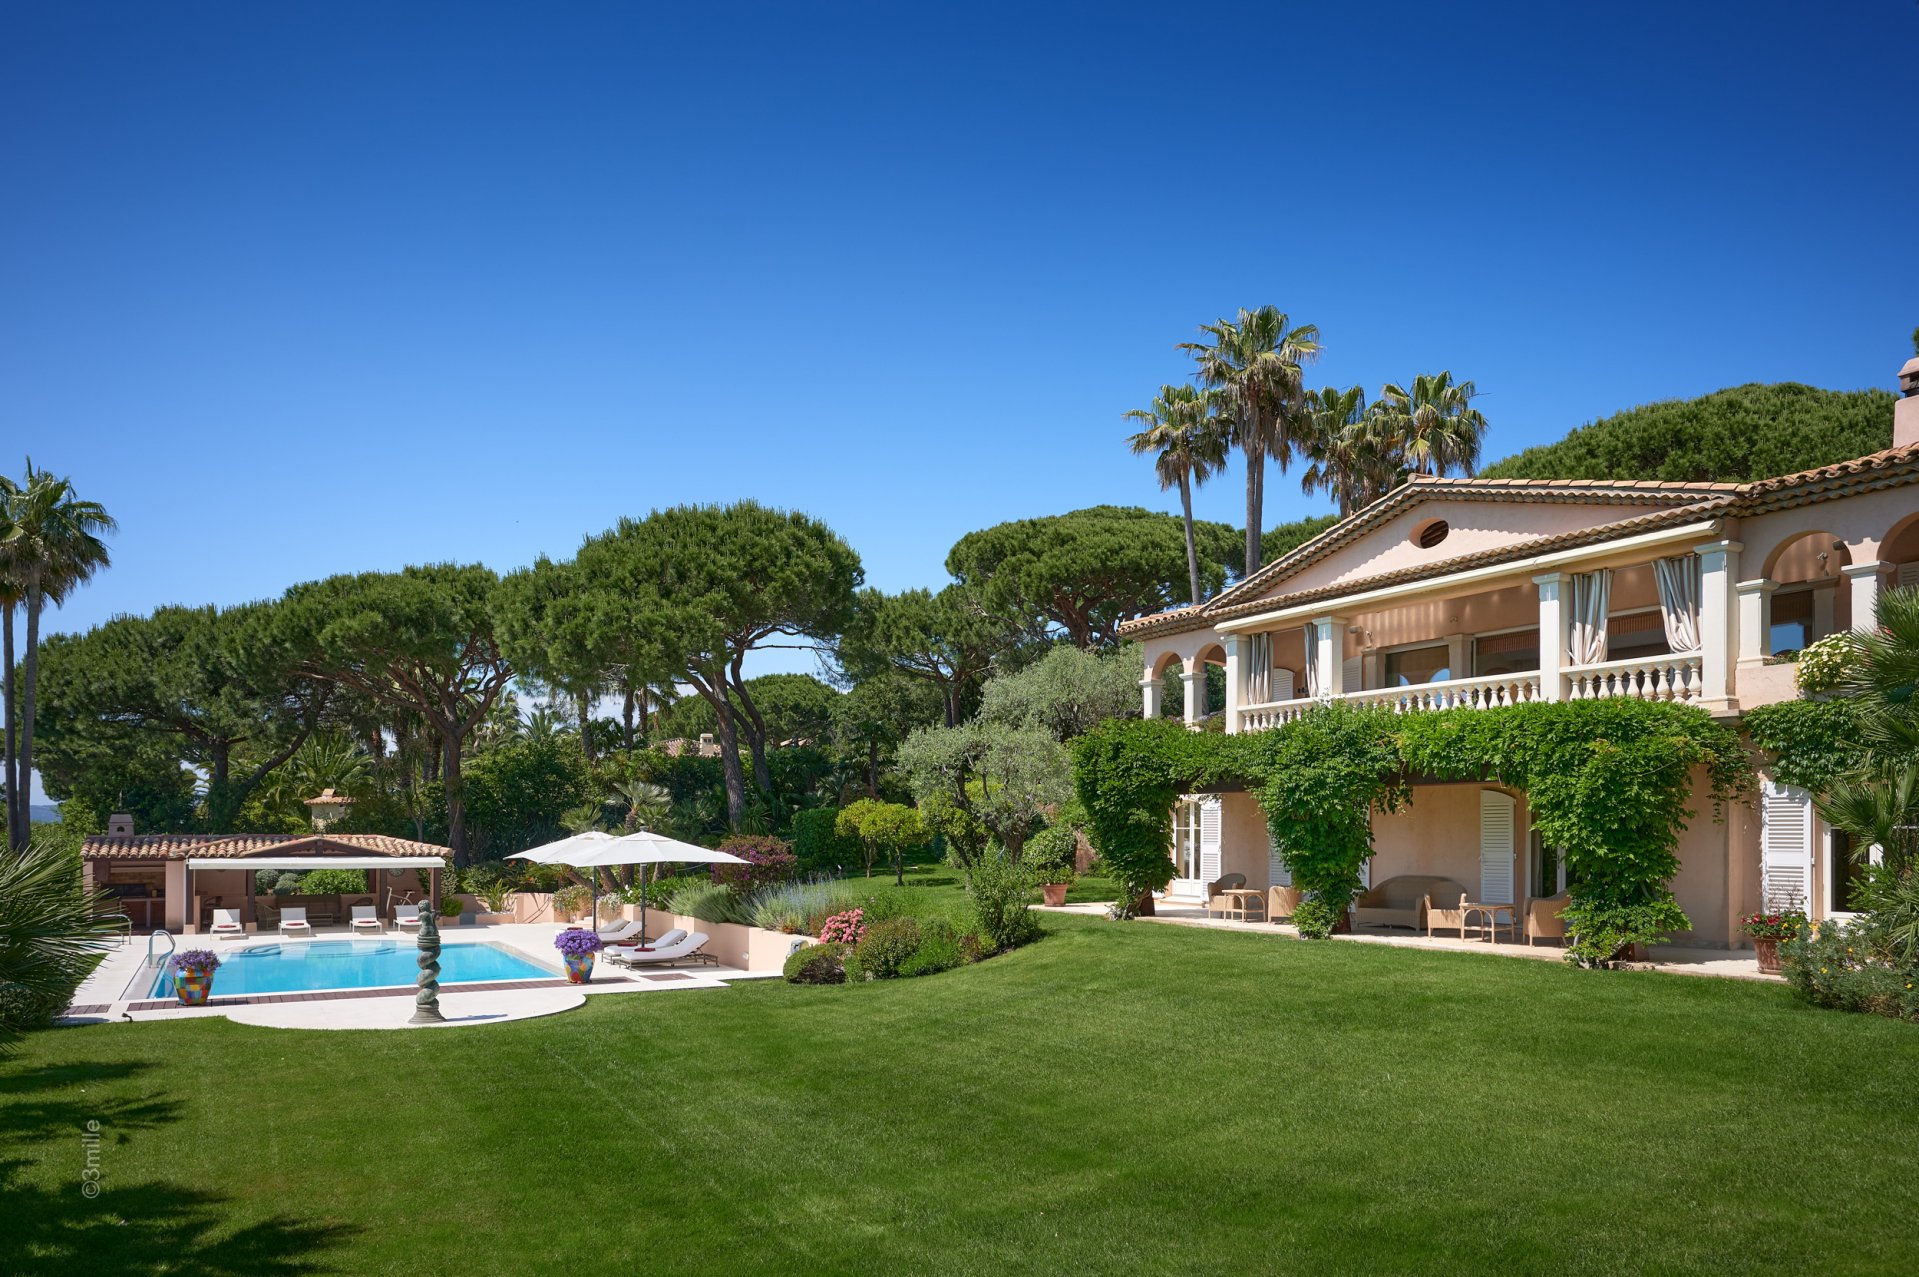 Ad Sale Property Saint-Tropez (83990) ref:V1617ST